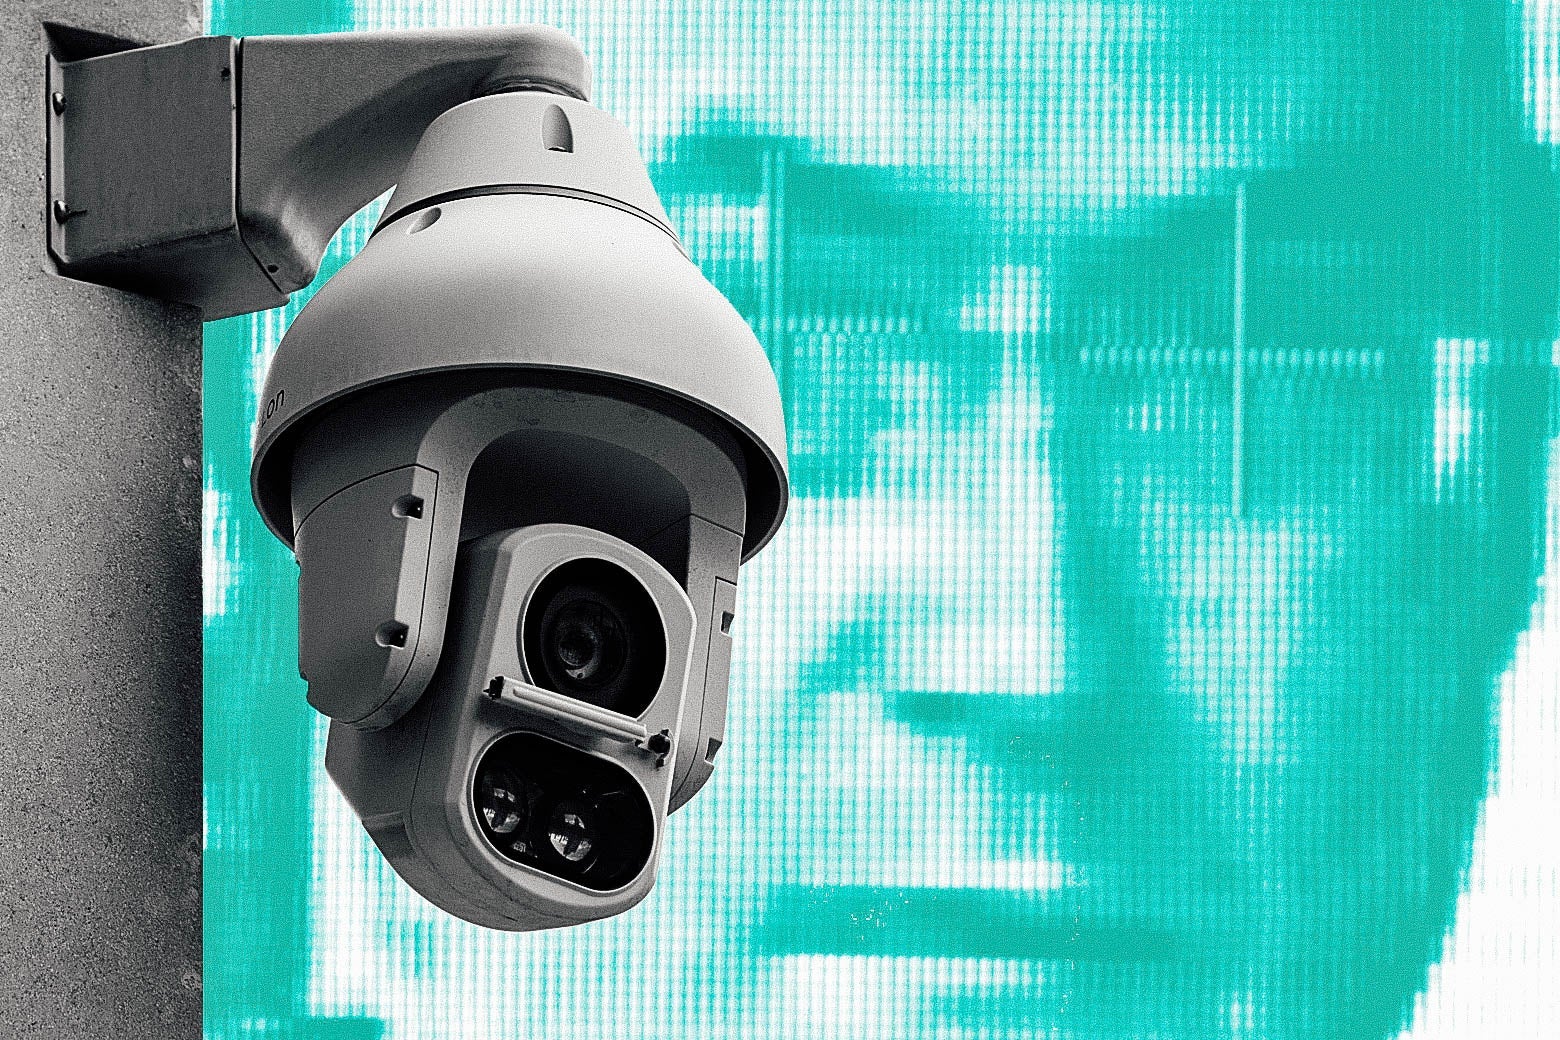 A surveillance camera set against a backdrop of facial recognition software midscan.